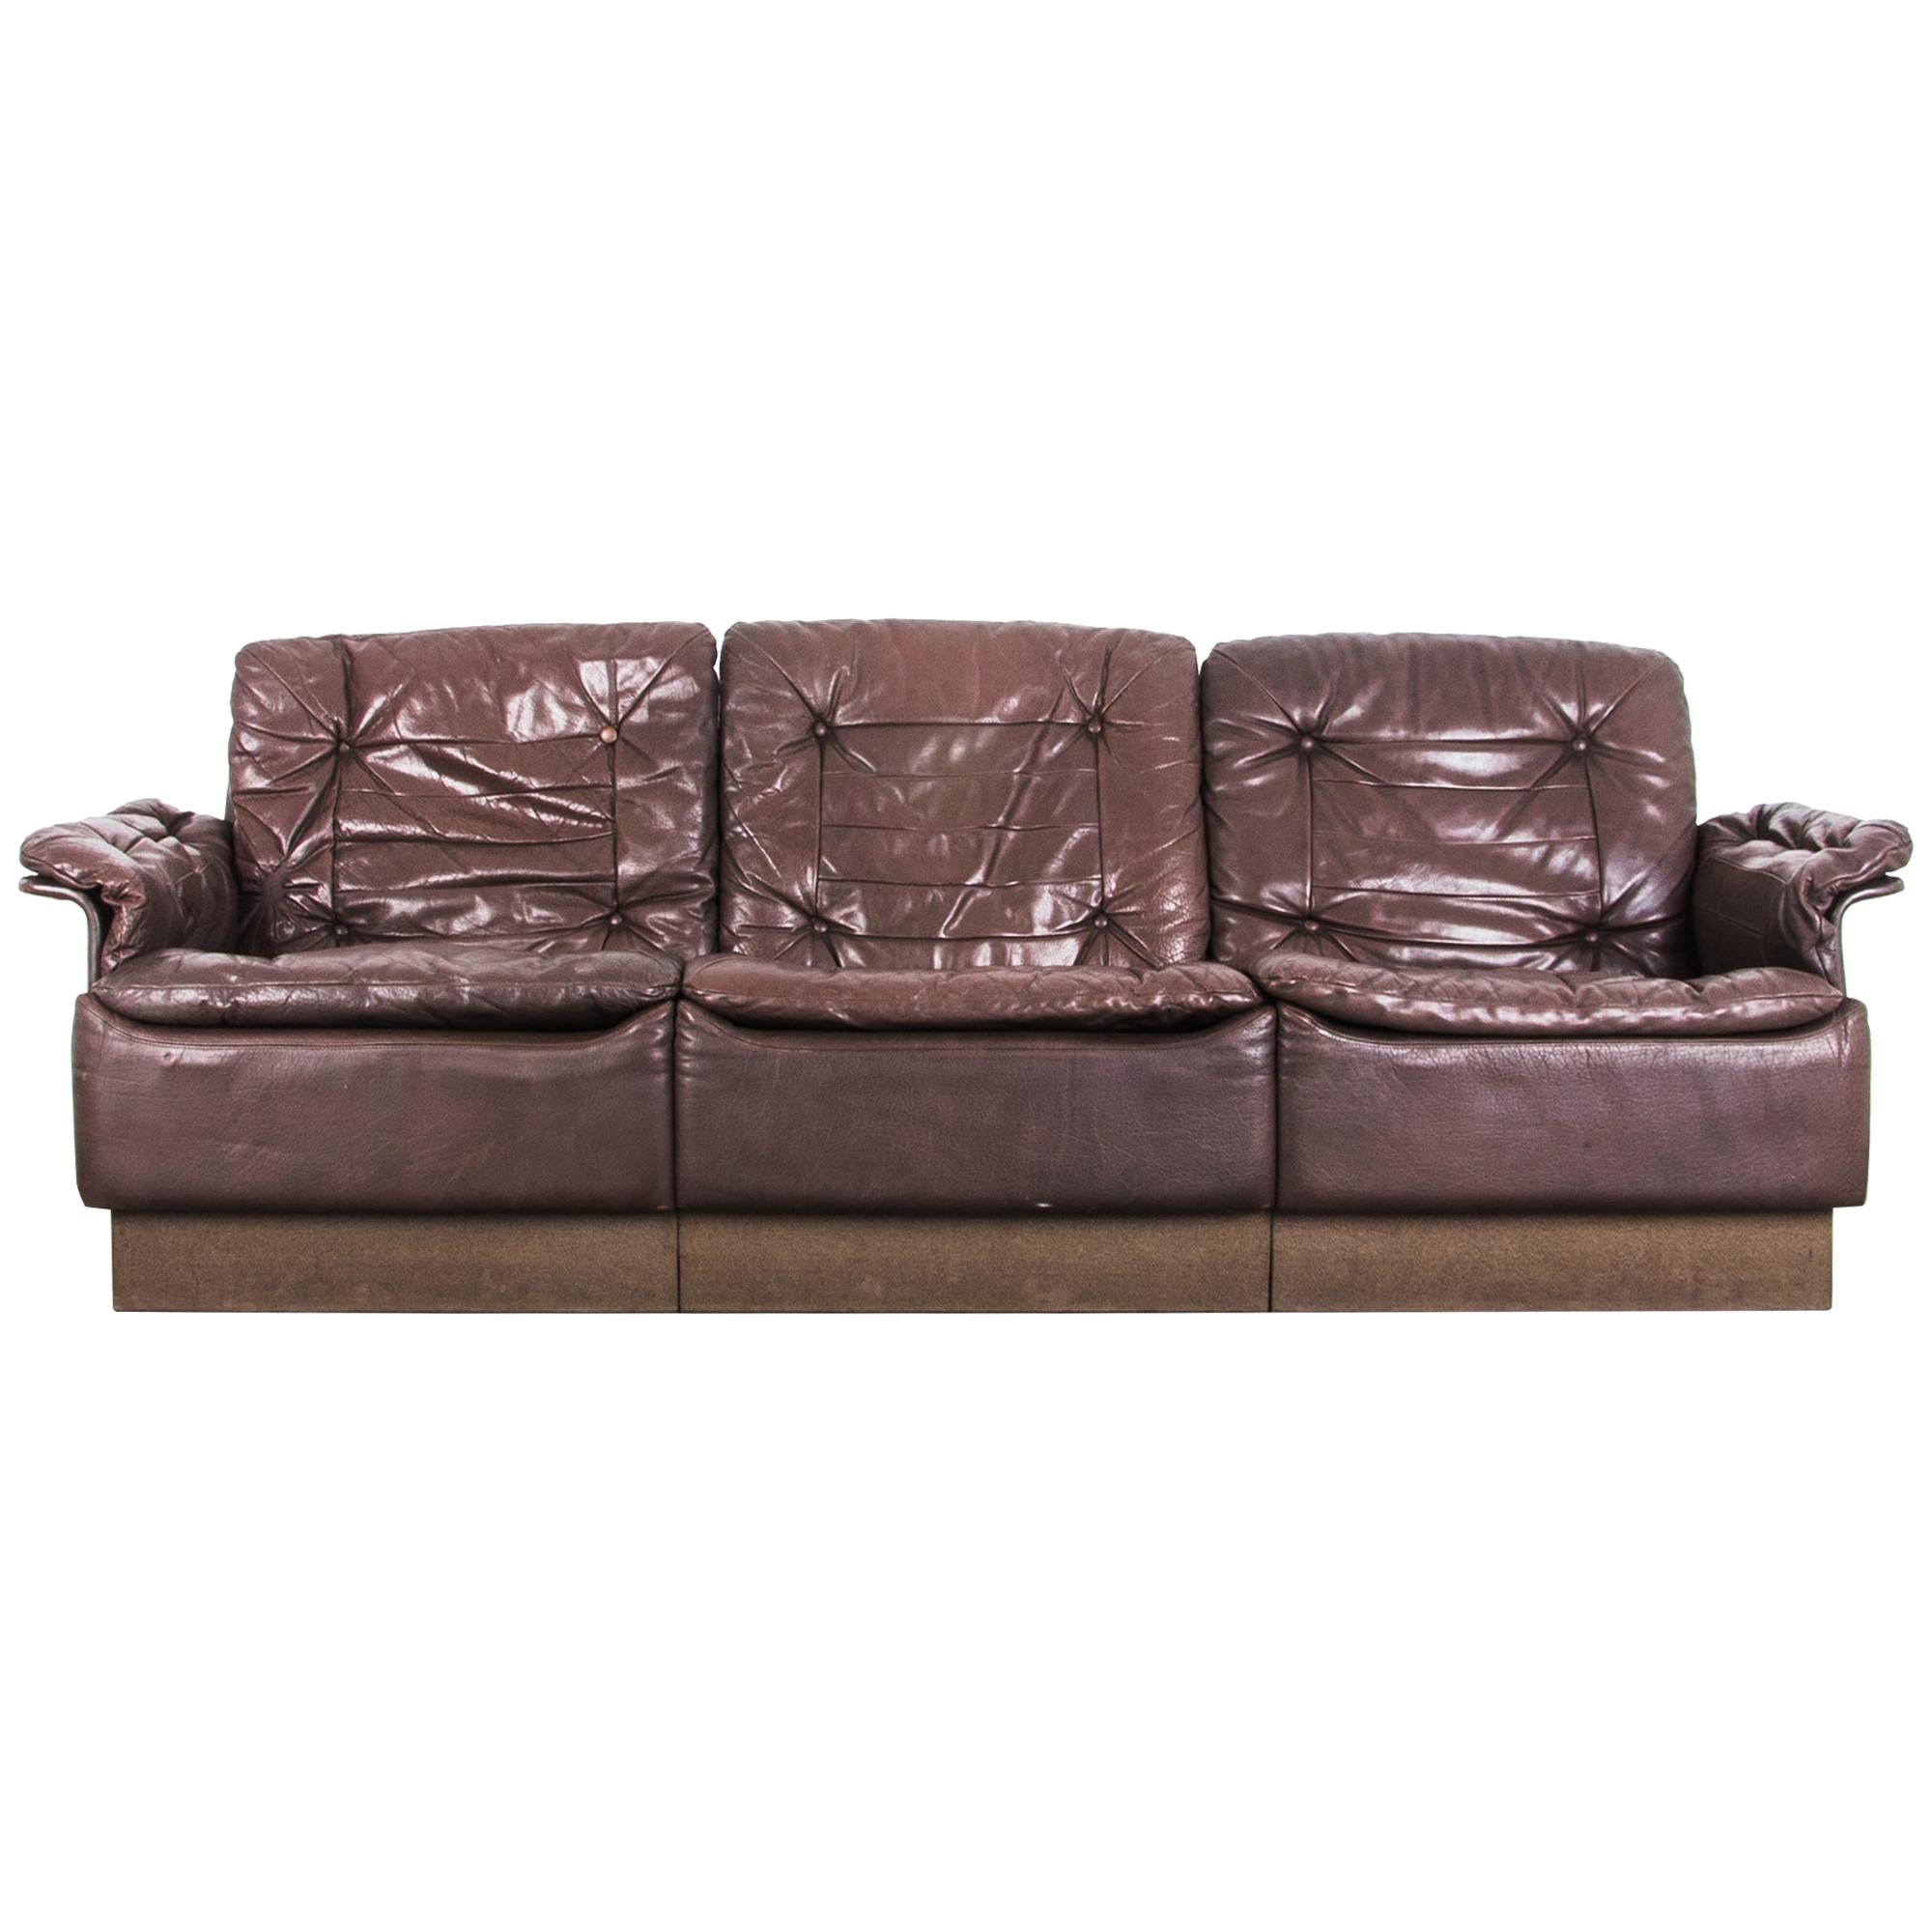 1970s Danish Modern Chocolate Brown Leather Sofa